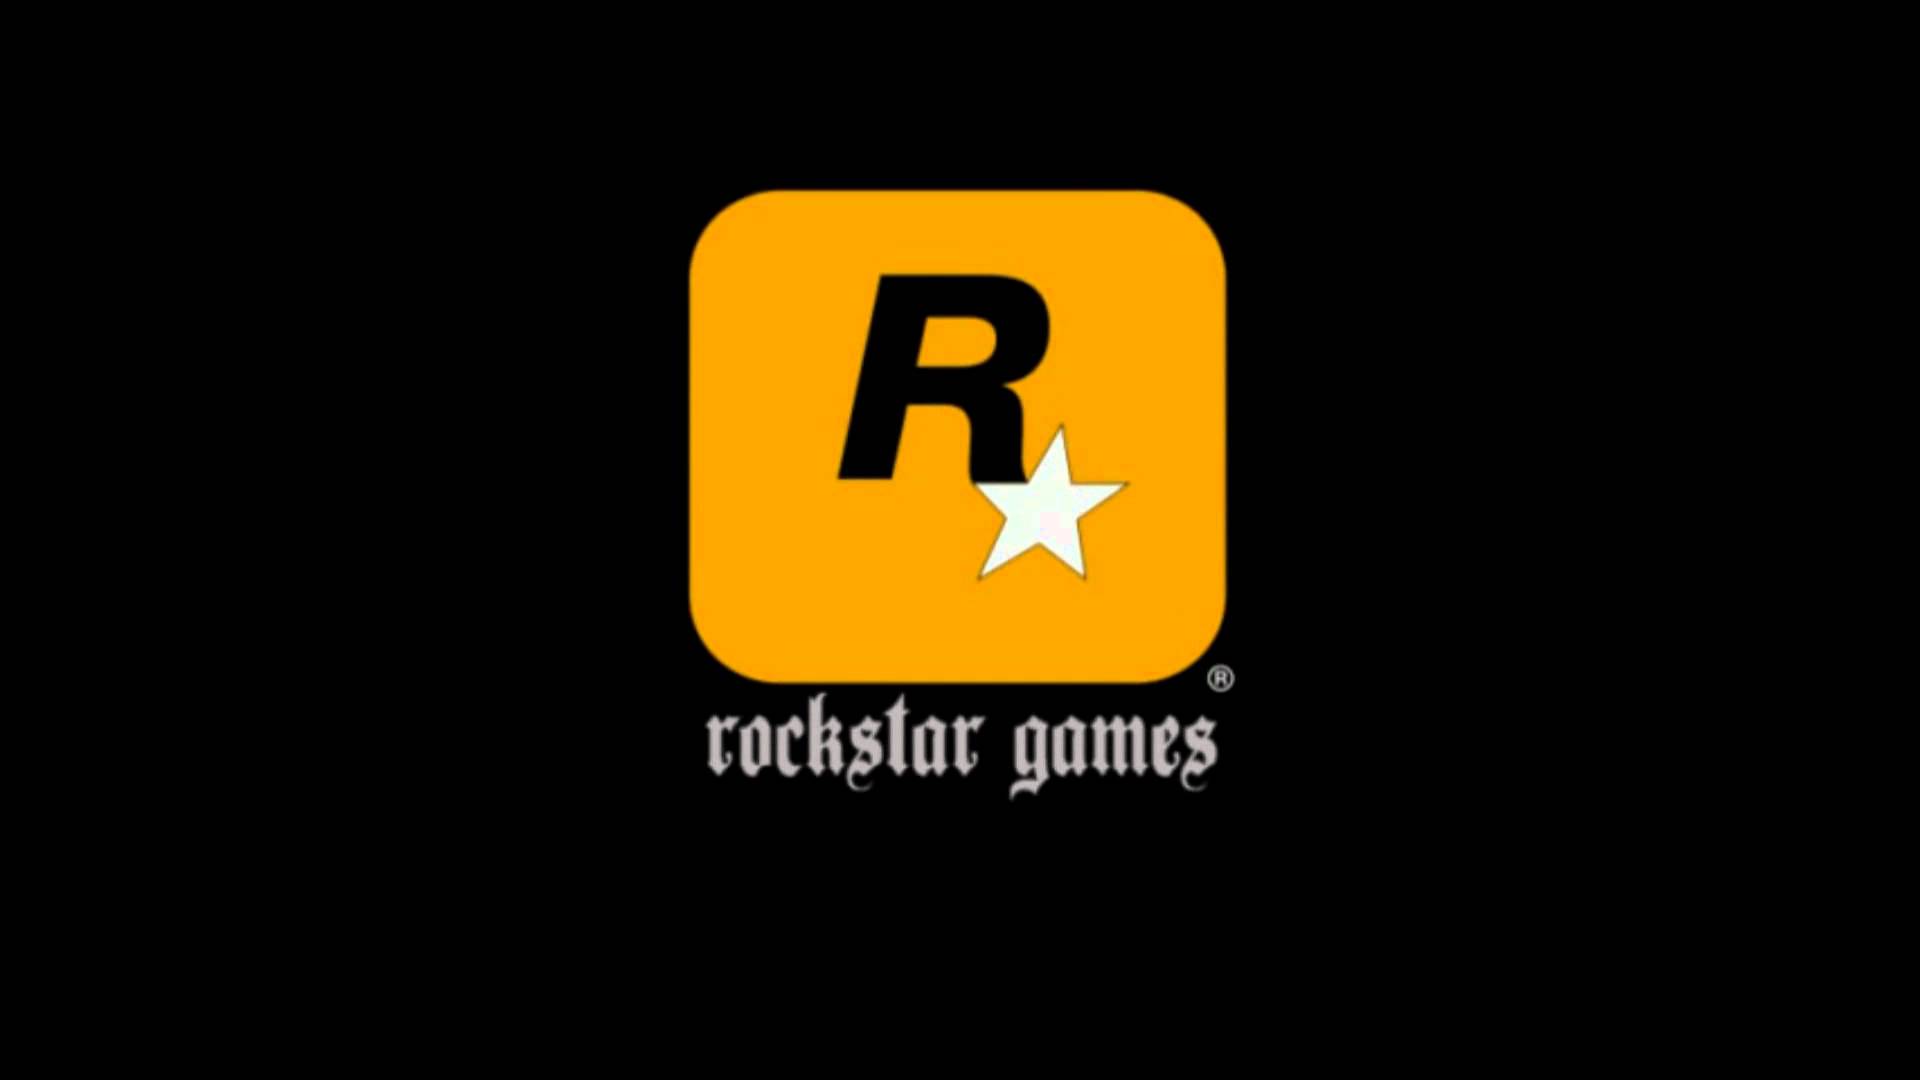 Como obter GTA San Andreas gratuitamente no Launcher da Rockstar